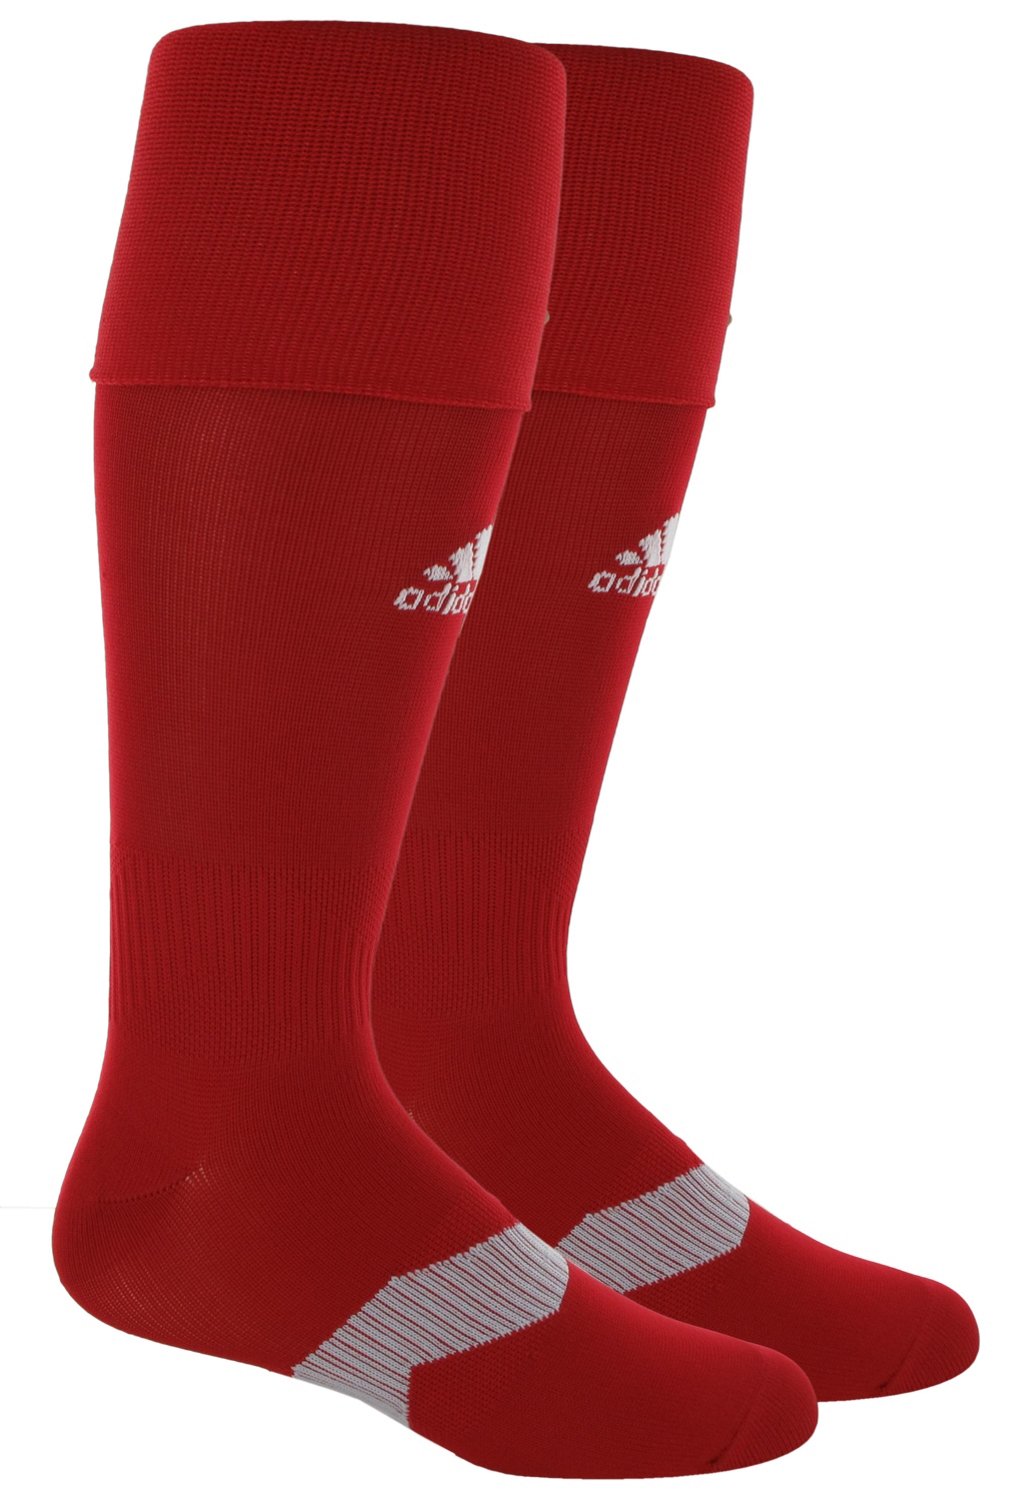 adidas Adults Metro Over the Calf Soccer Socks